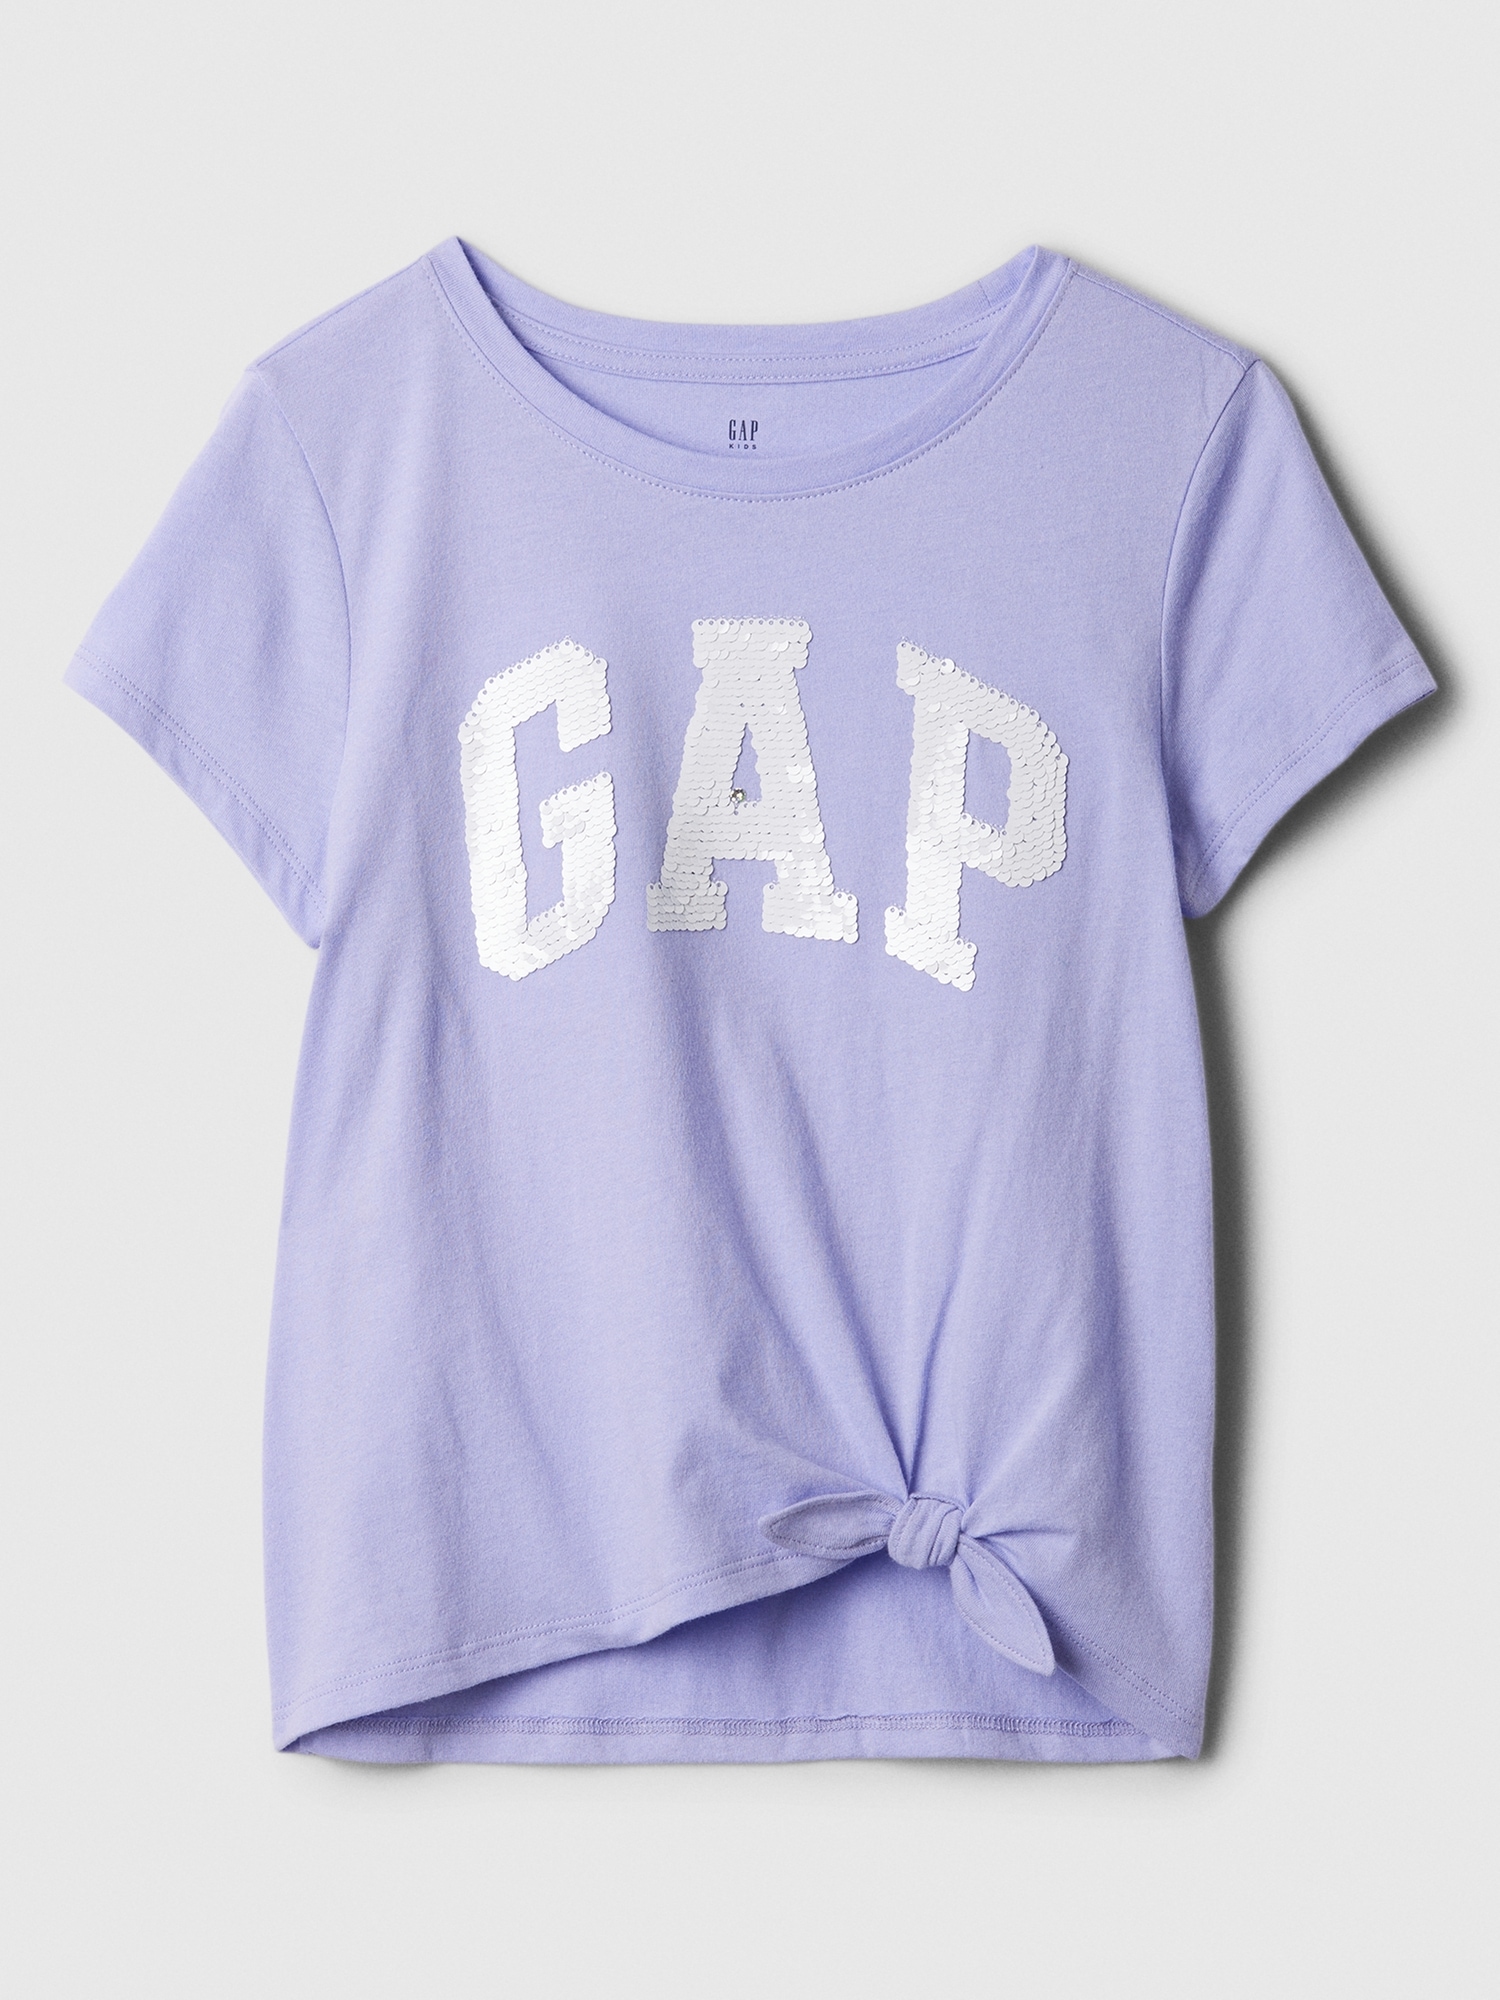 Kids Gap Logo Knot-Tie T-Shirt | Gap Factory